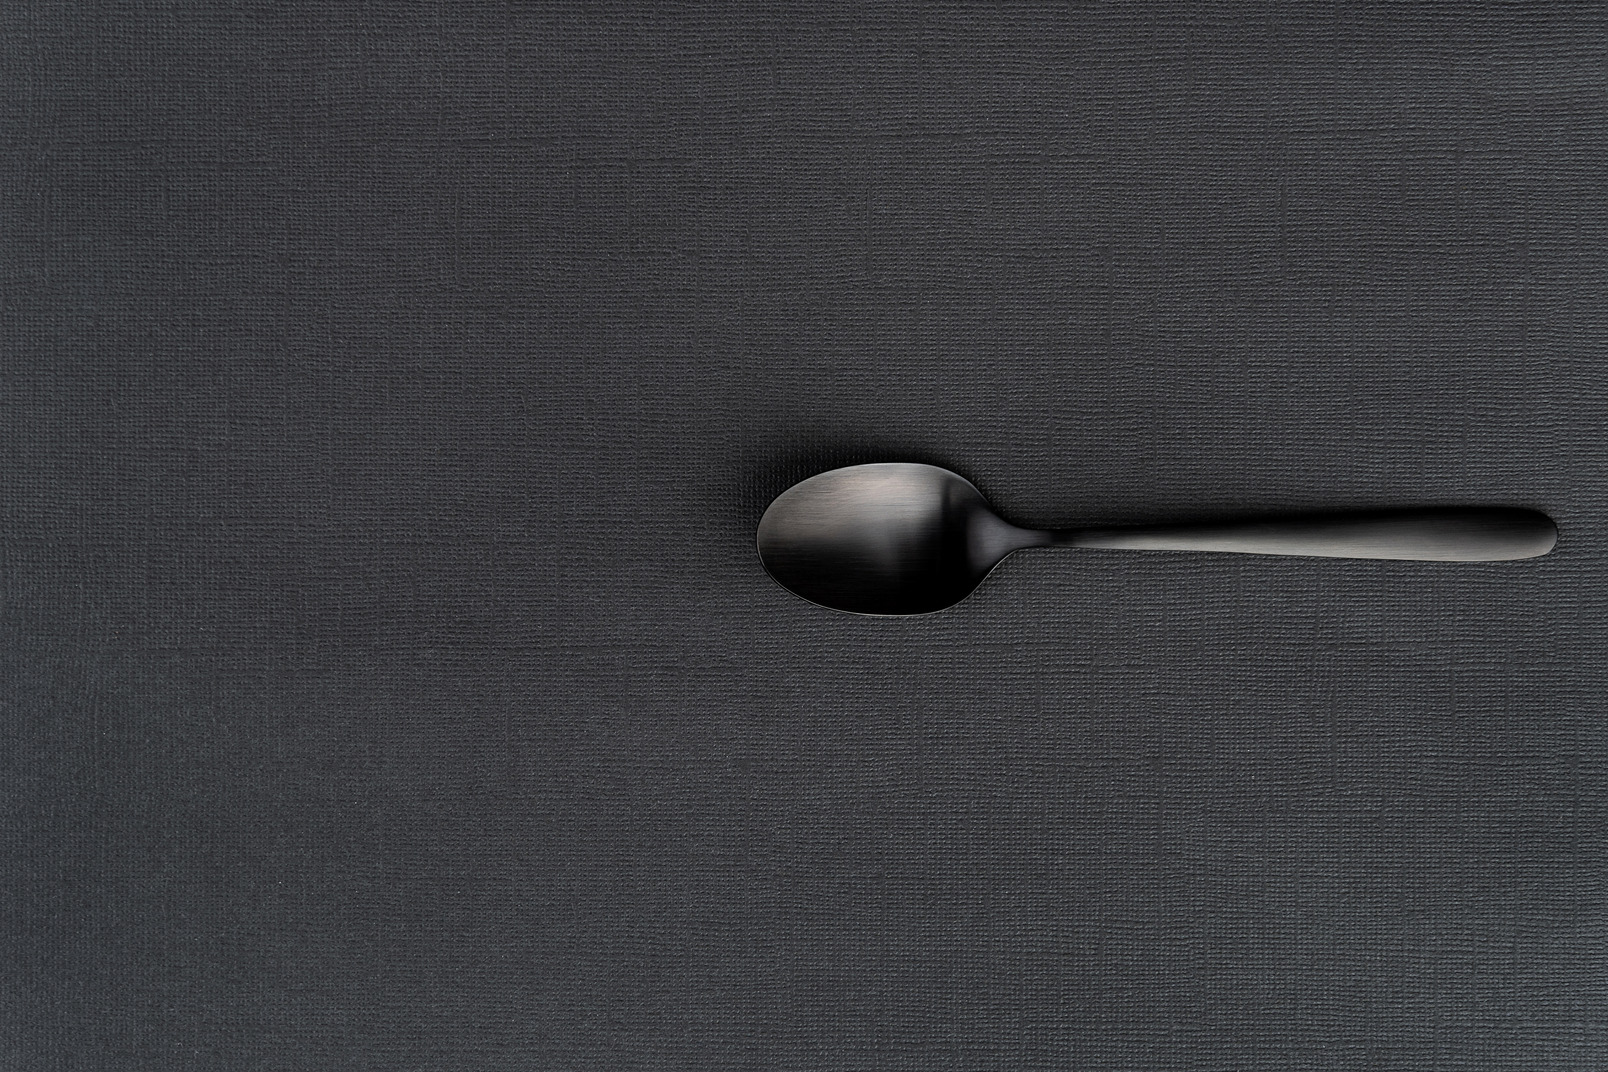 Black tea spoon in the dark